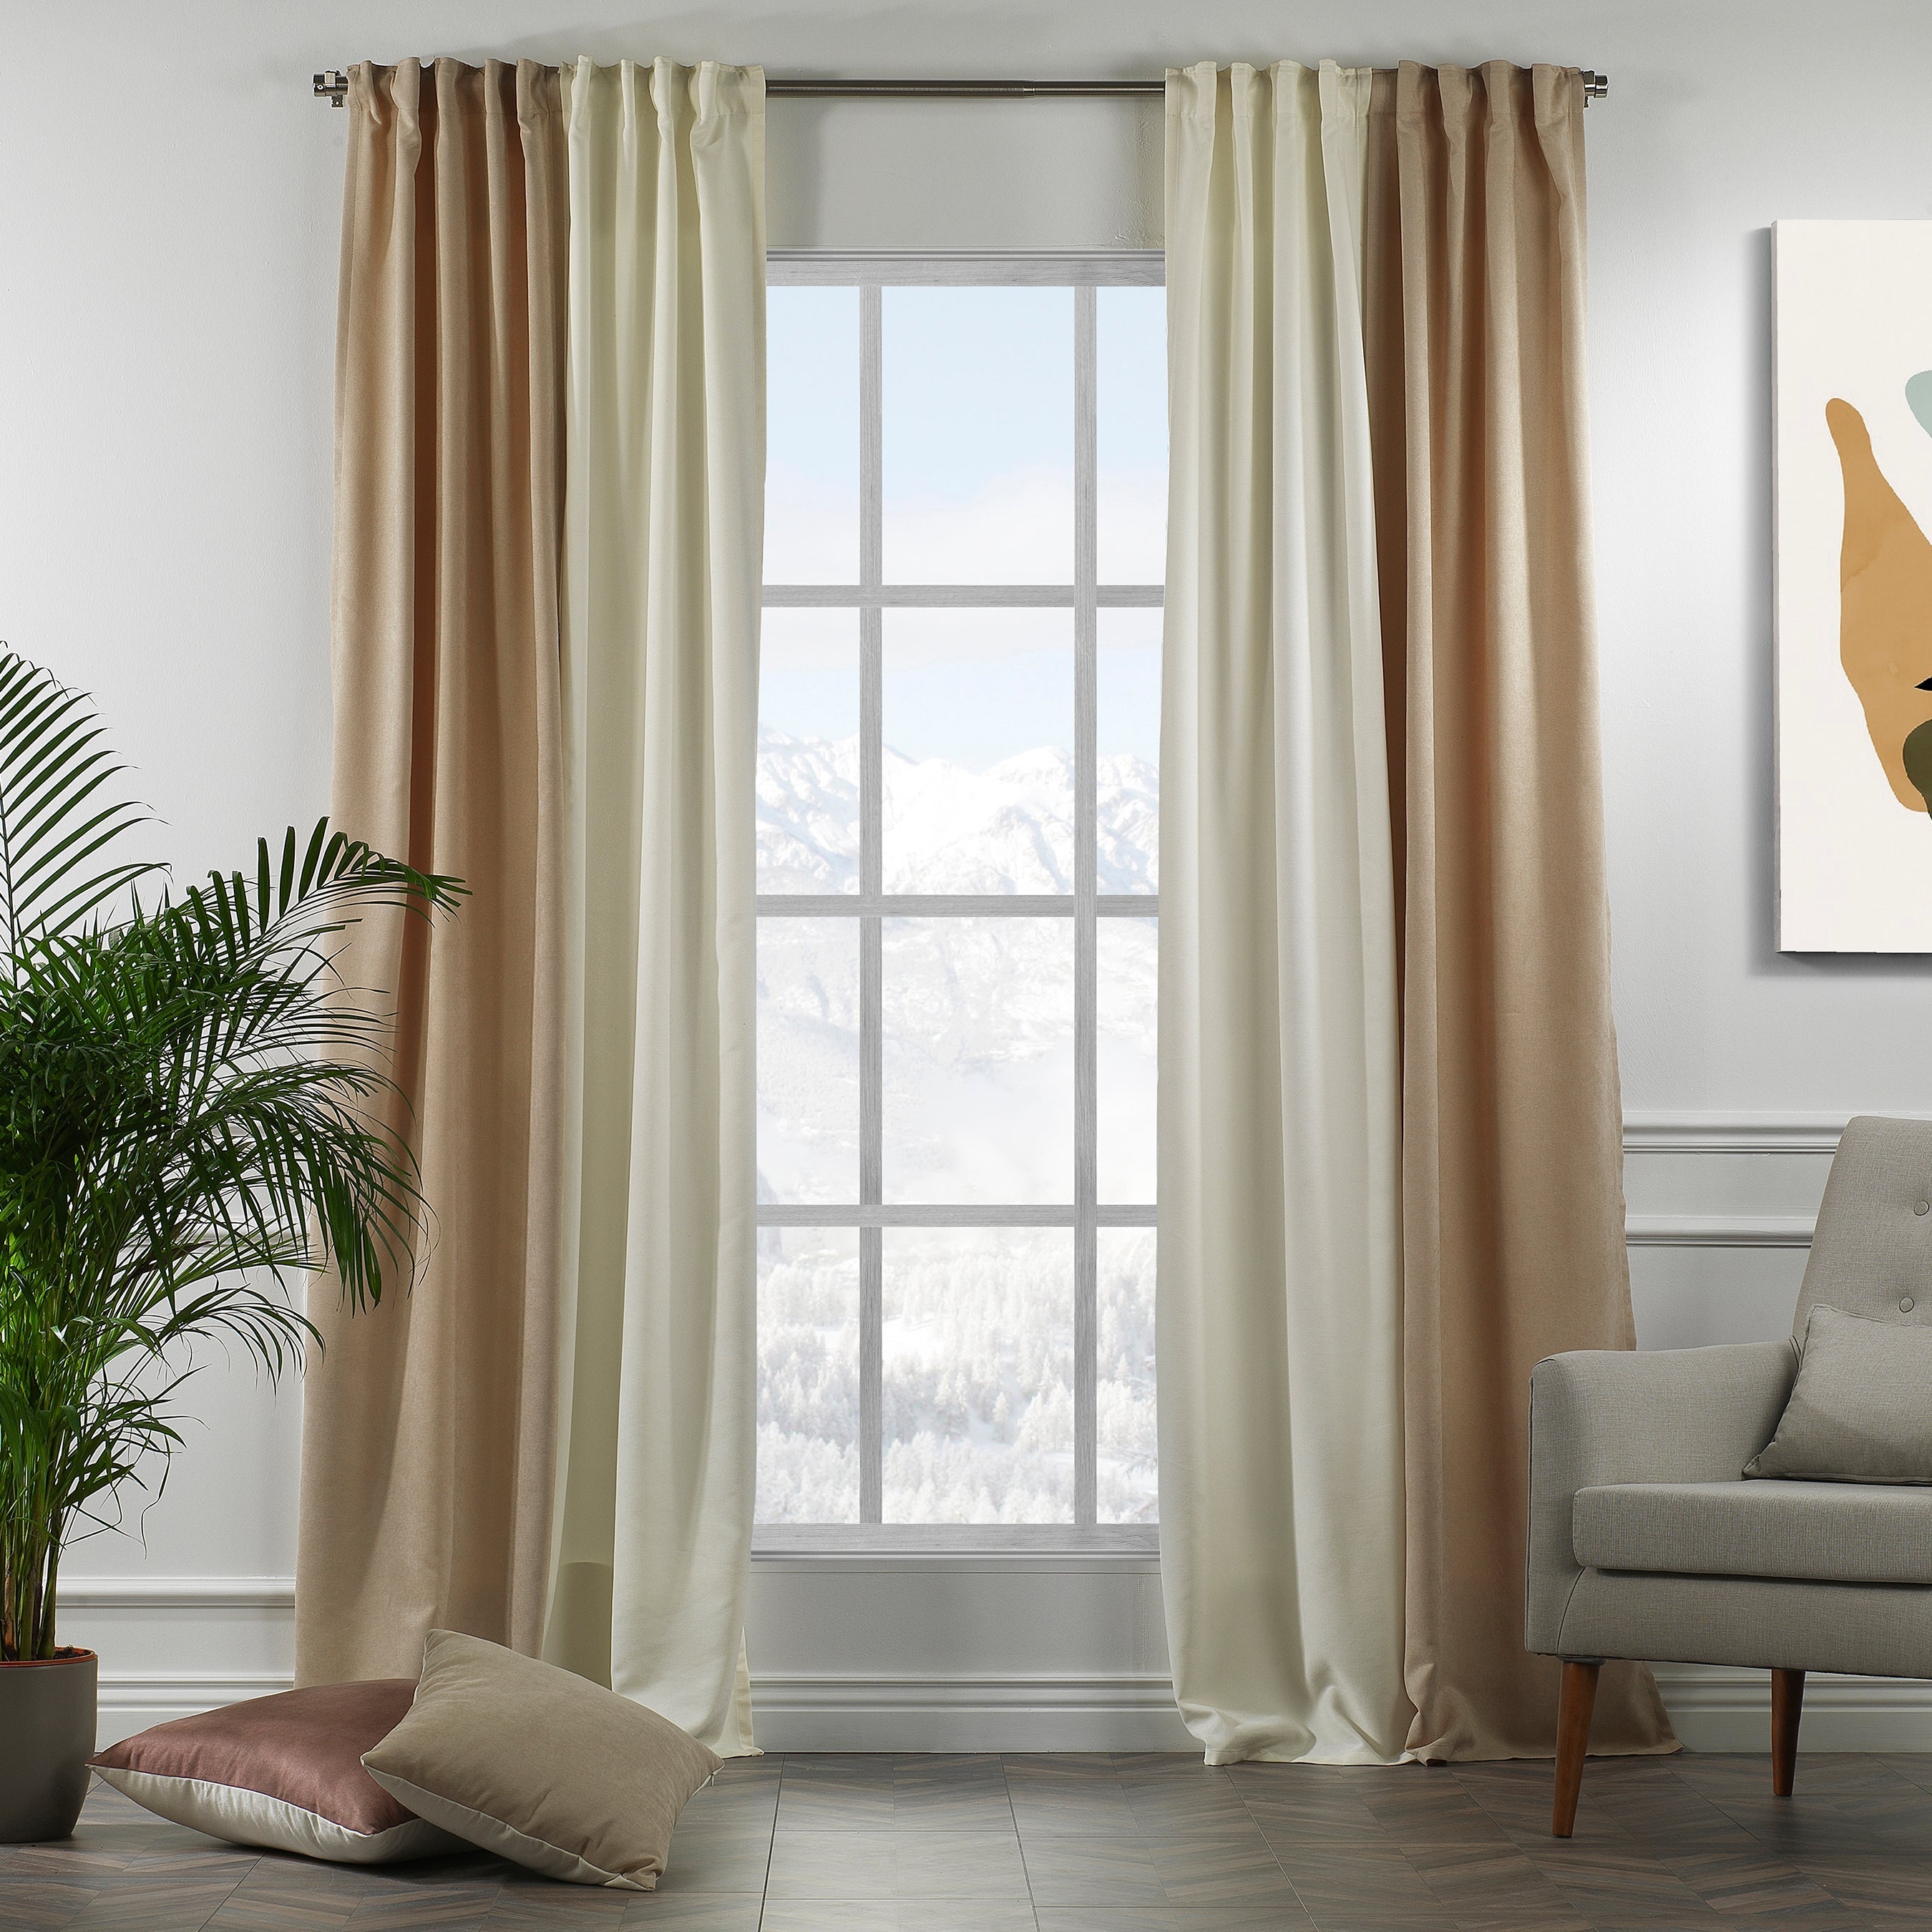 Curtains, Curtain decor, Drapes curtains